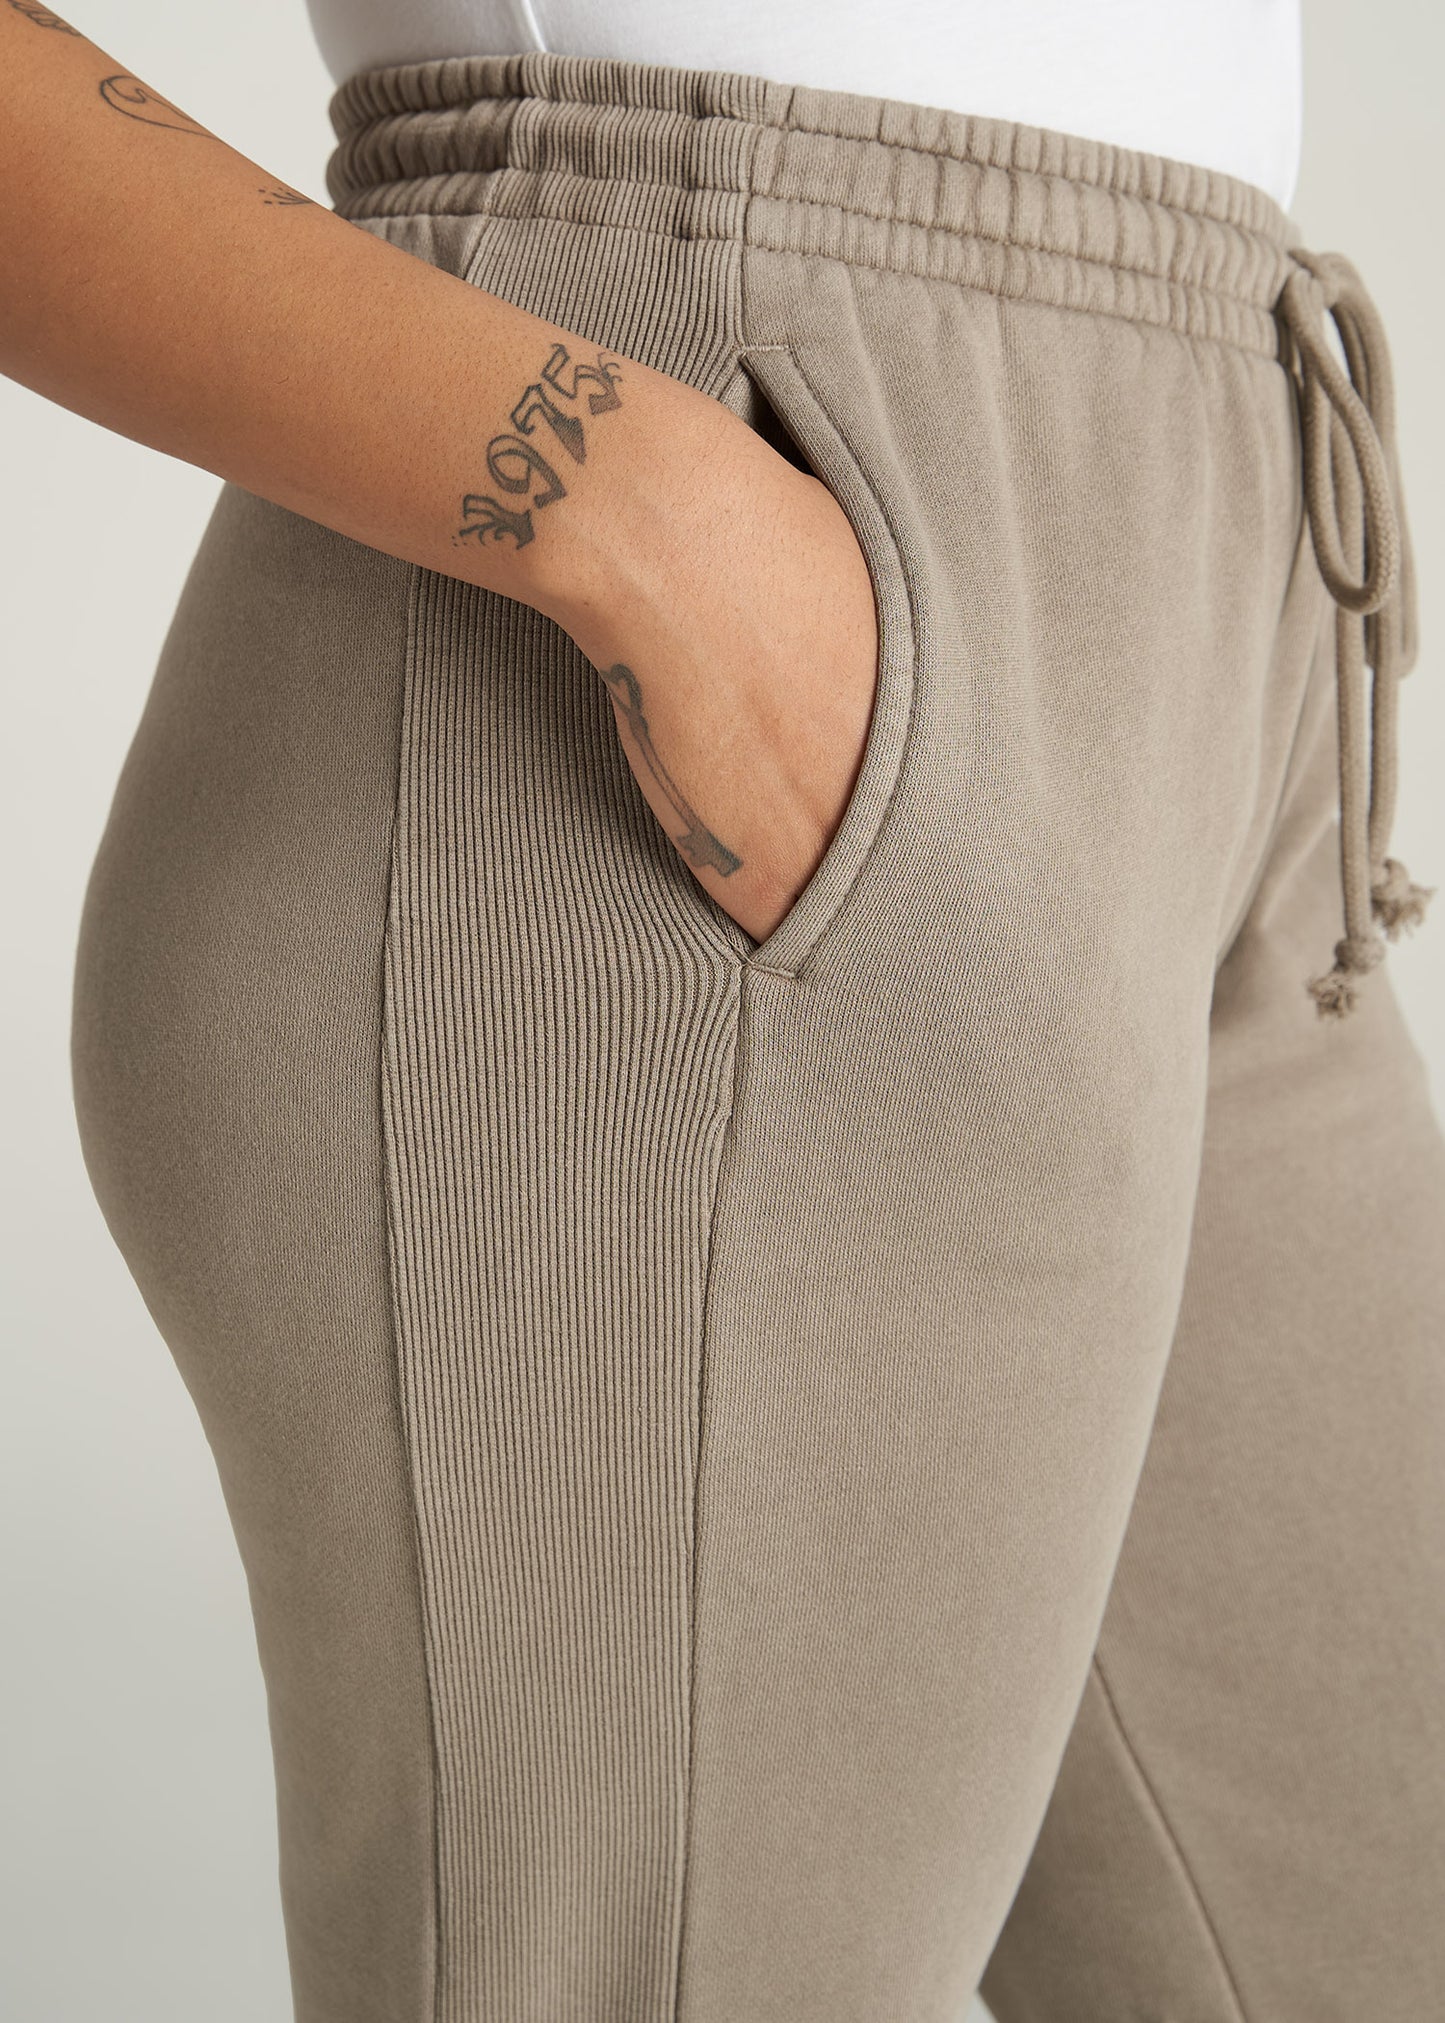 Long Inseam Sweatpants: Tall Woman's Sweatpants Khaki